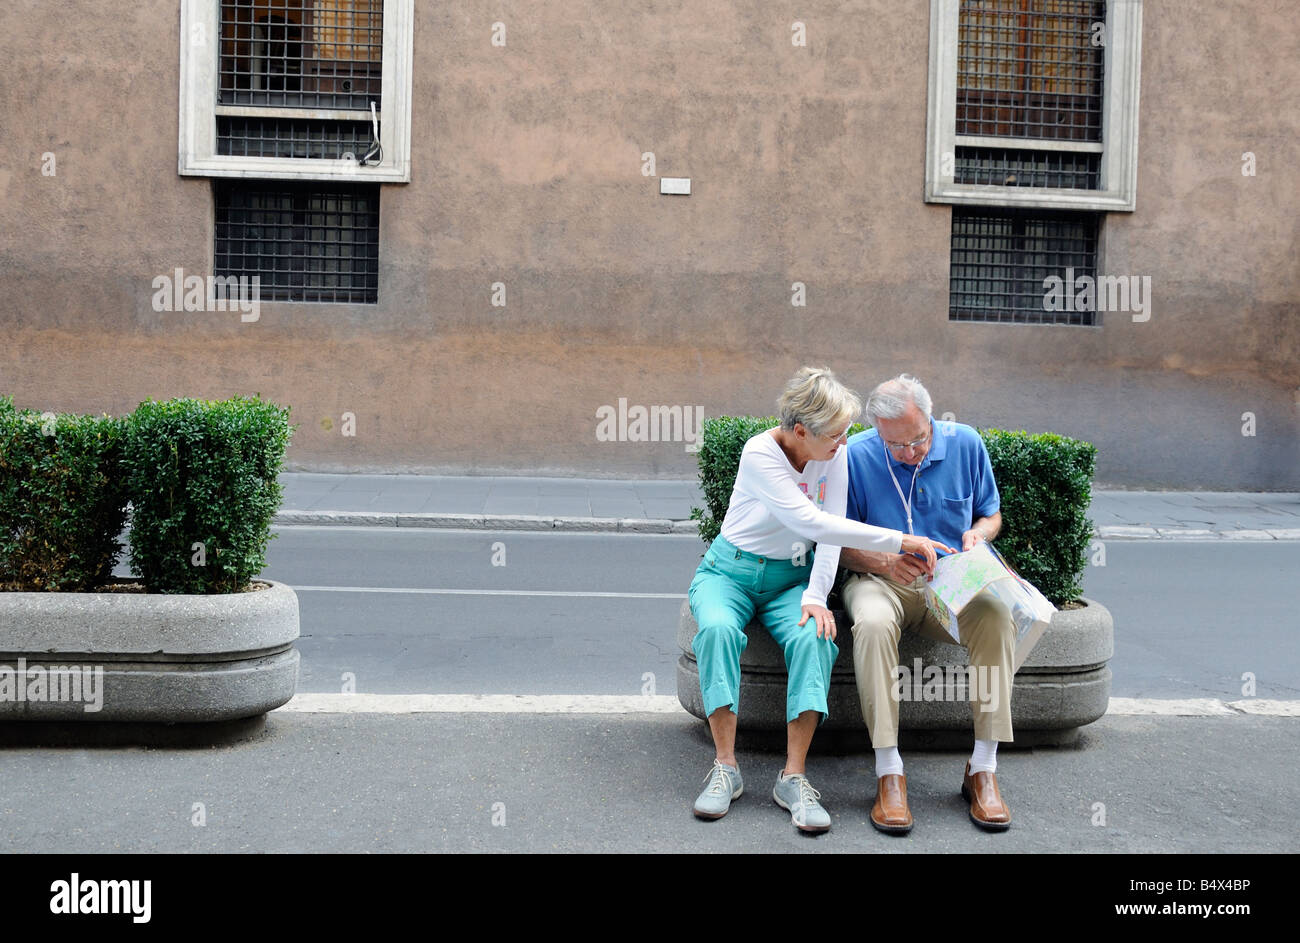 senior-citizens-sightseeing-in-rome-B4X4